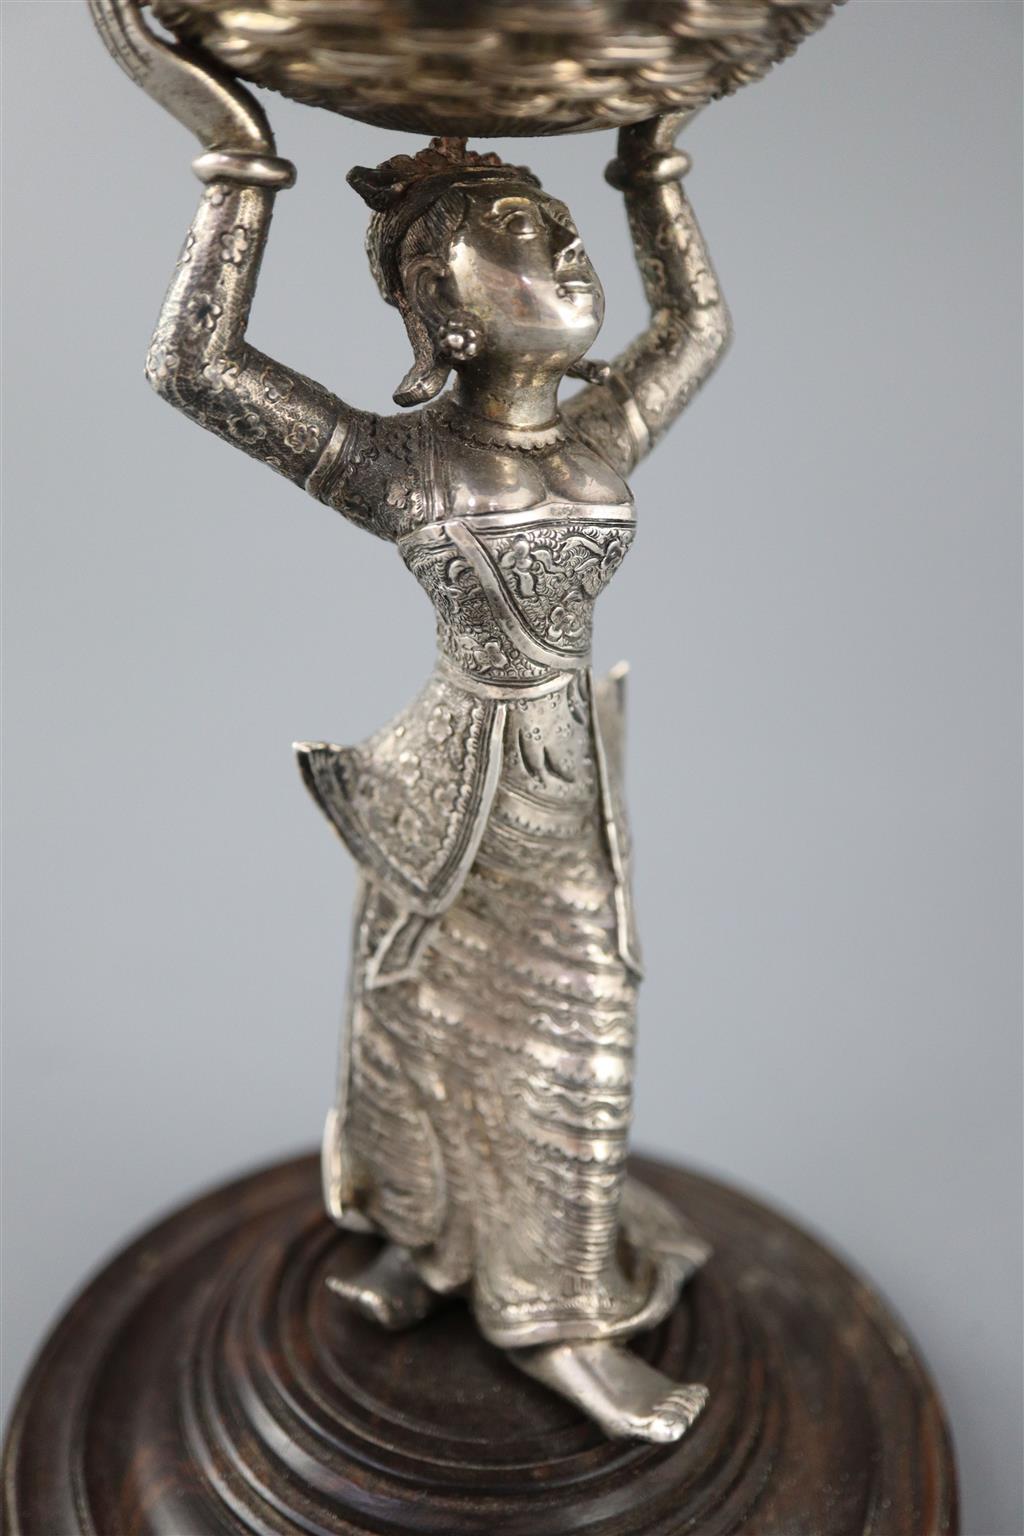 A 19th century Burmese engraved silver figural table salt,